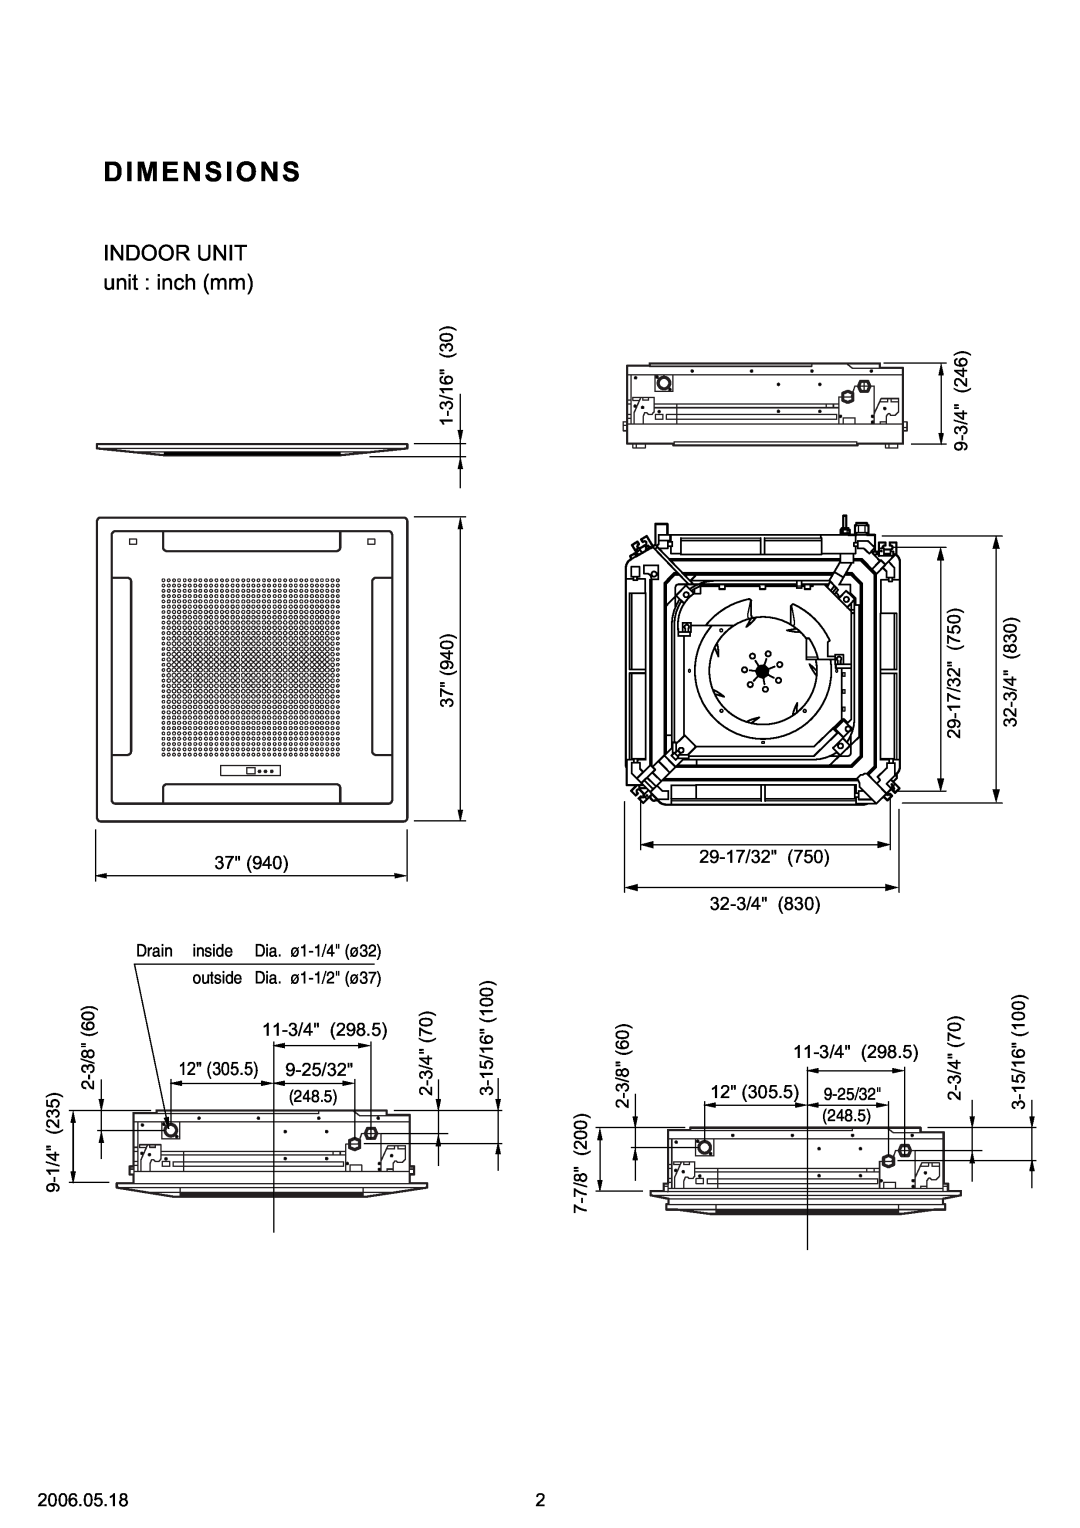 Friedrich MC24Y3F, MR24UY3F specifications Dimensions, INDOOR UNIT unit inch mm 